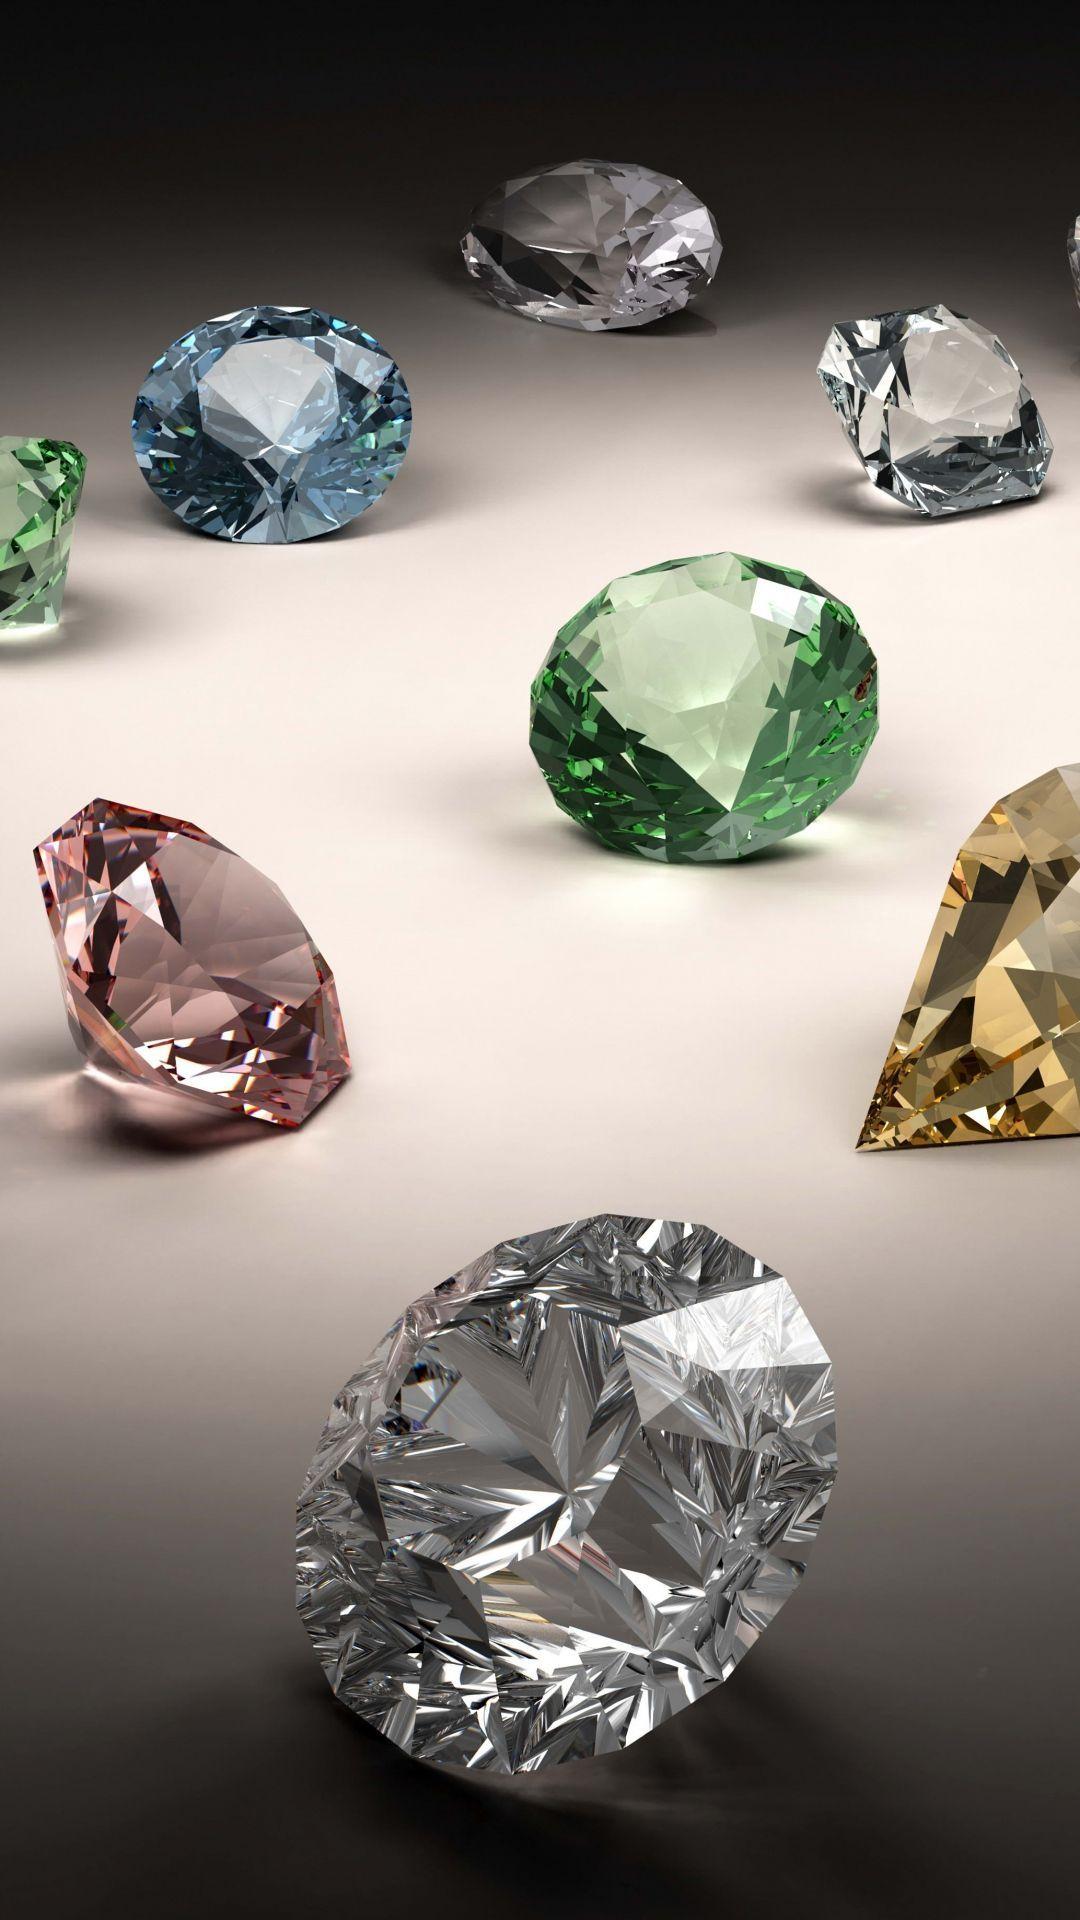 Glass diamond artificial jewel surface white 3d illustration horizontal  texture wallpaper background Stock Photo  Alamy